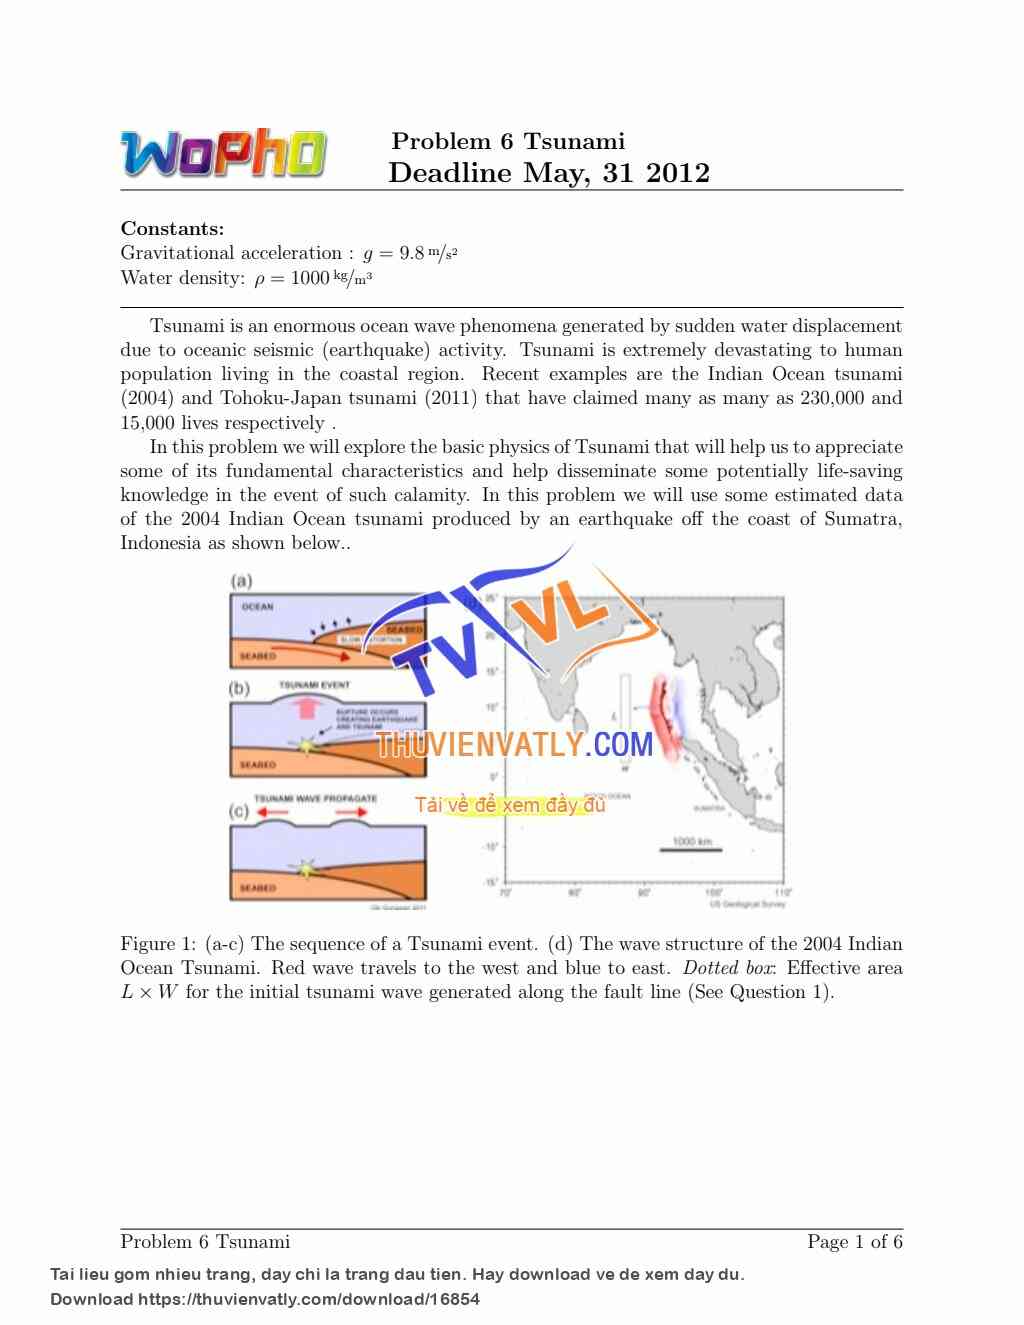 WophO Problem 6 Tsunami (Sóng thần) Deadline May, 31 2012